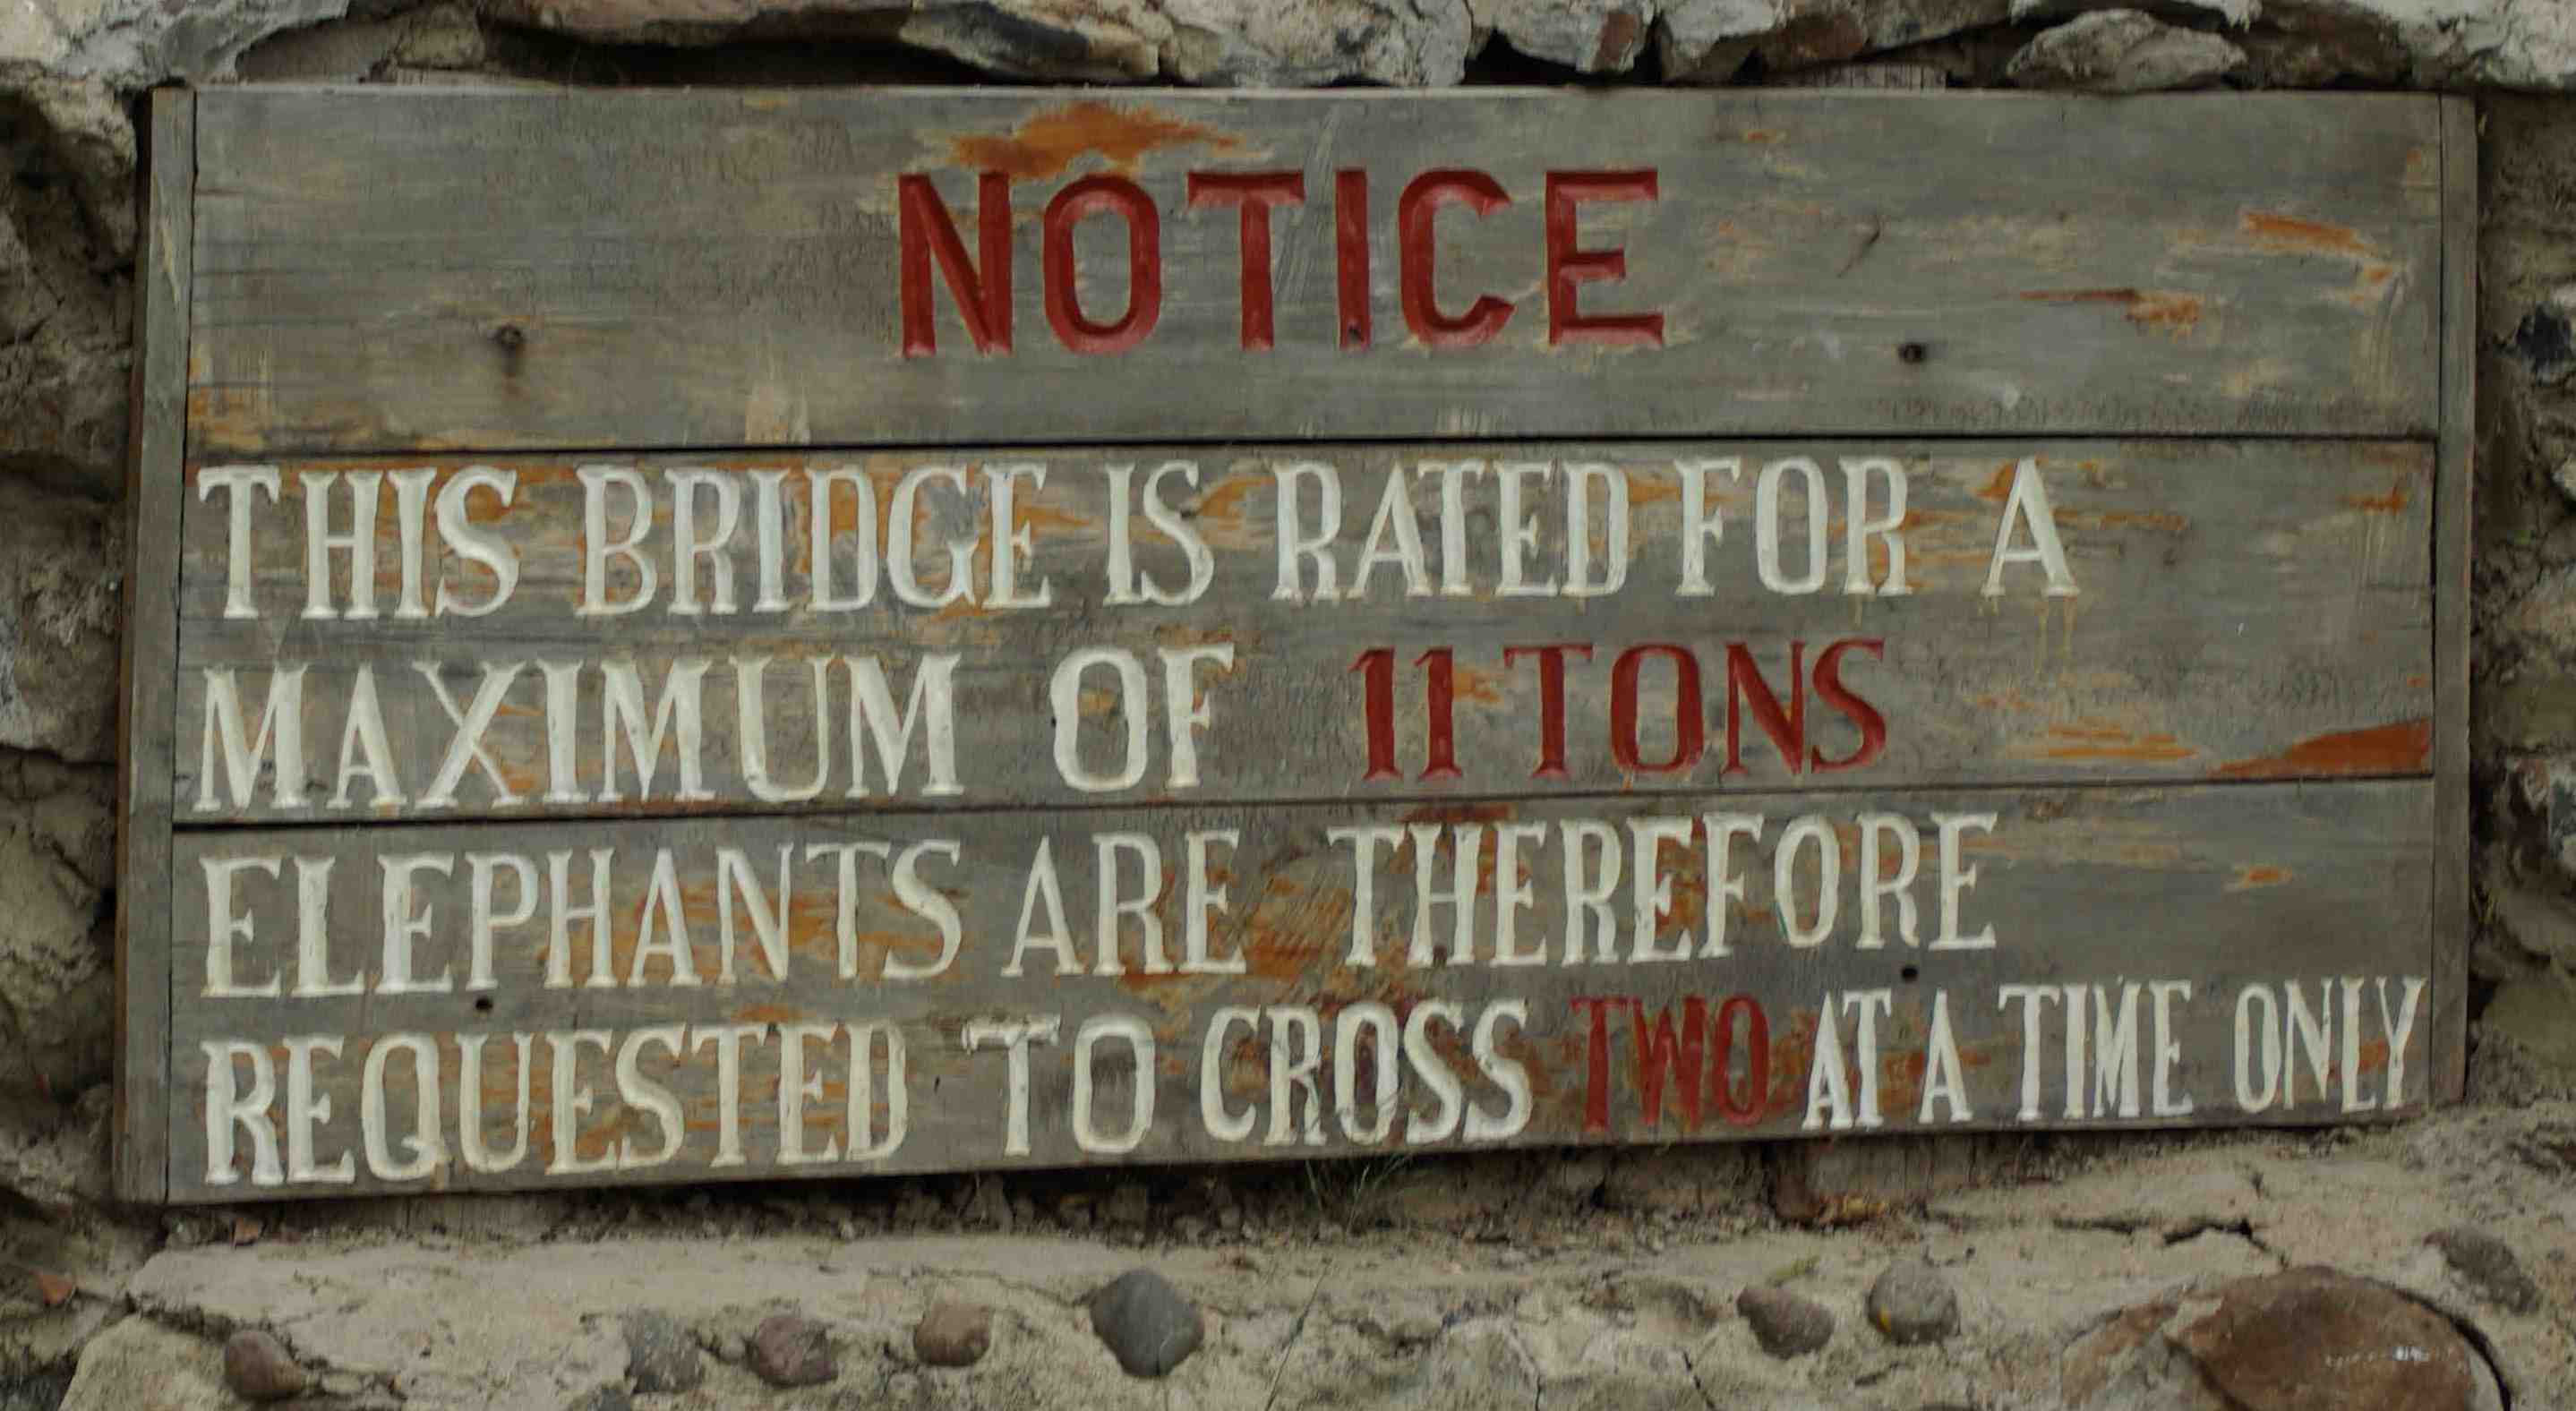 Warning sign for elephants